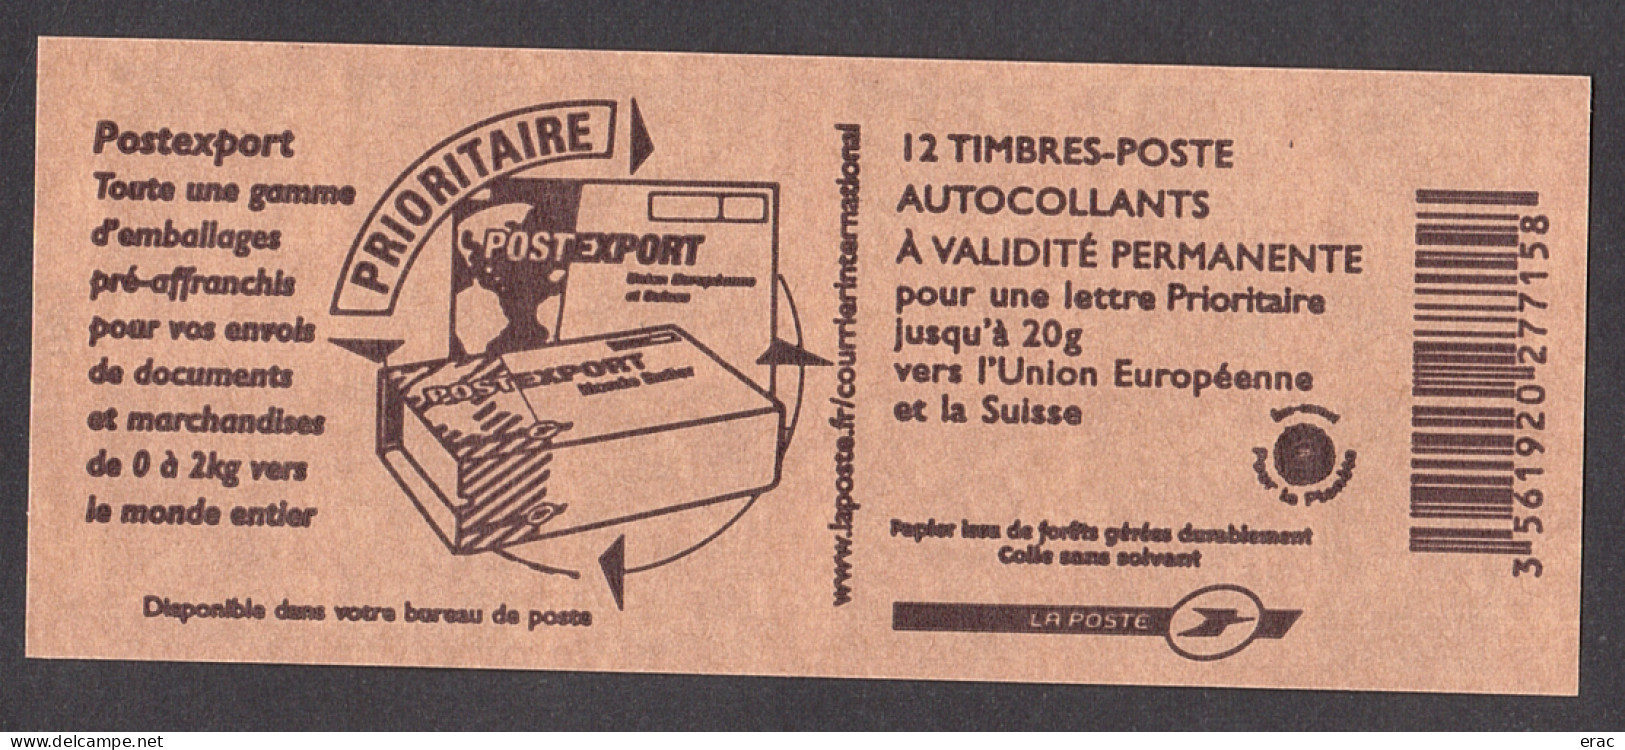 France - Carnet 4127-C1 - Neuf ** - N° De Liasse - Marianne De Lamouche - Postexport - Libretti